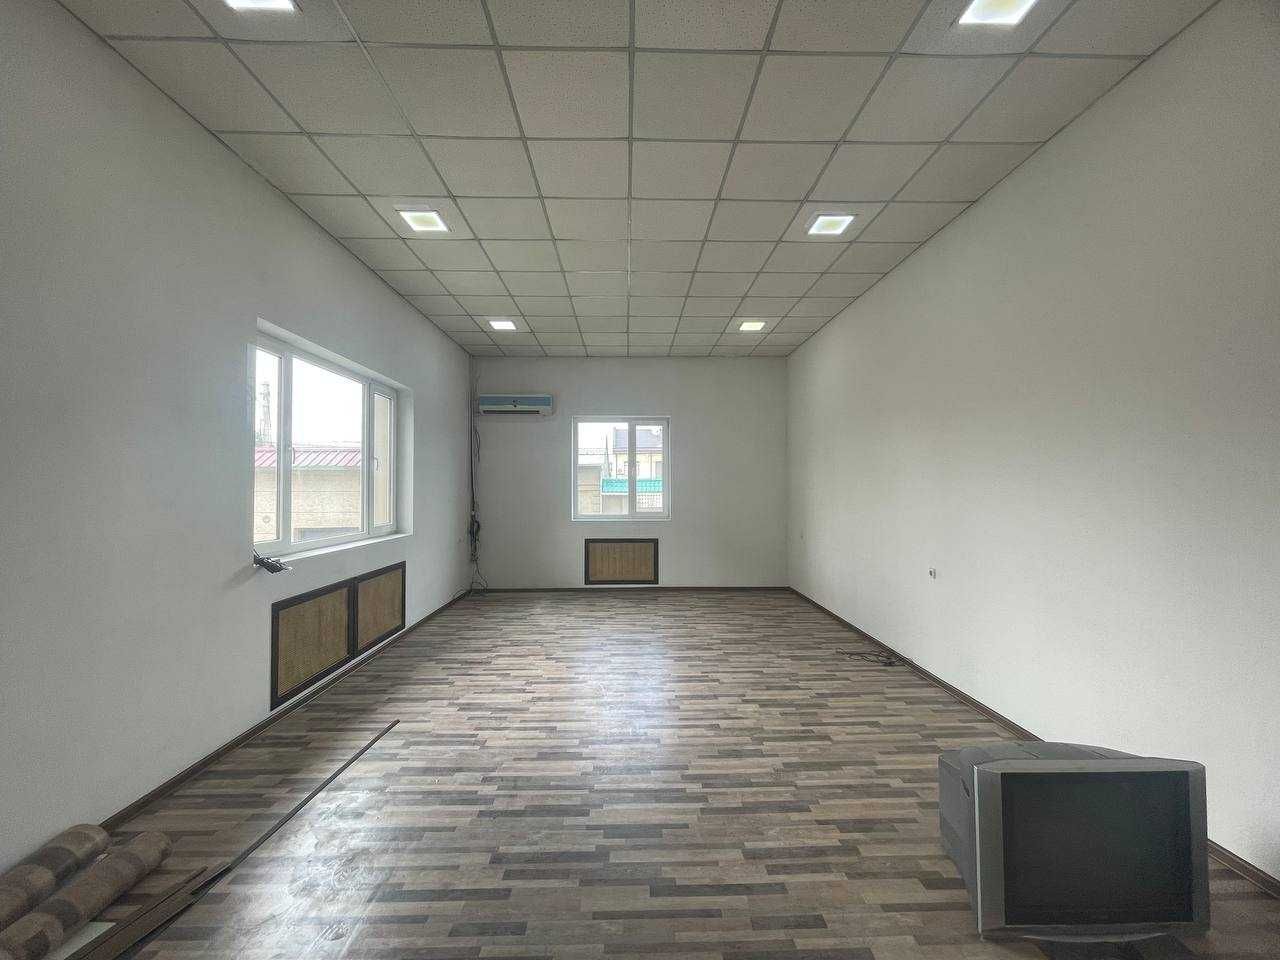 Продаётся дом 4 сотки IT-парк Мирзо-Улугбекского района J2255